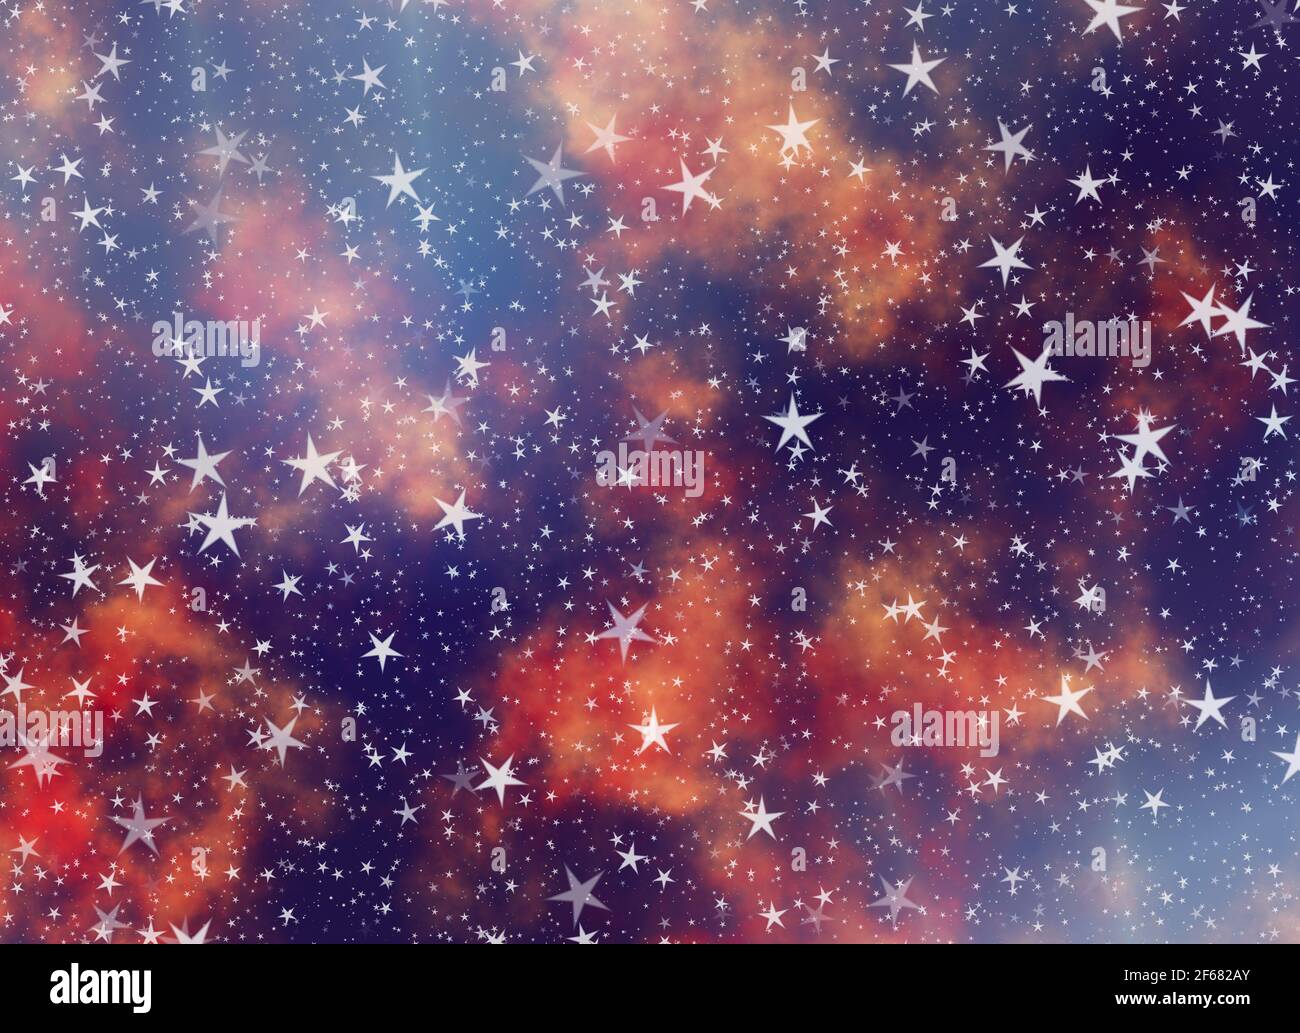 many flying stars on a dreamy sky background Stock Photo